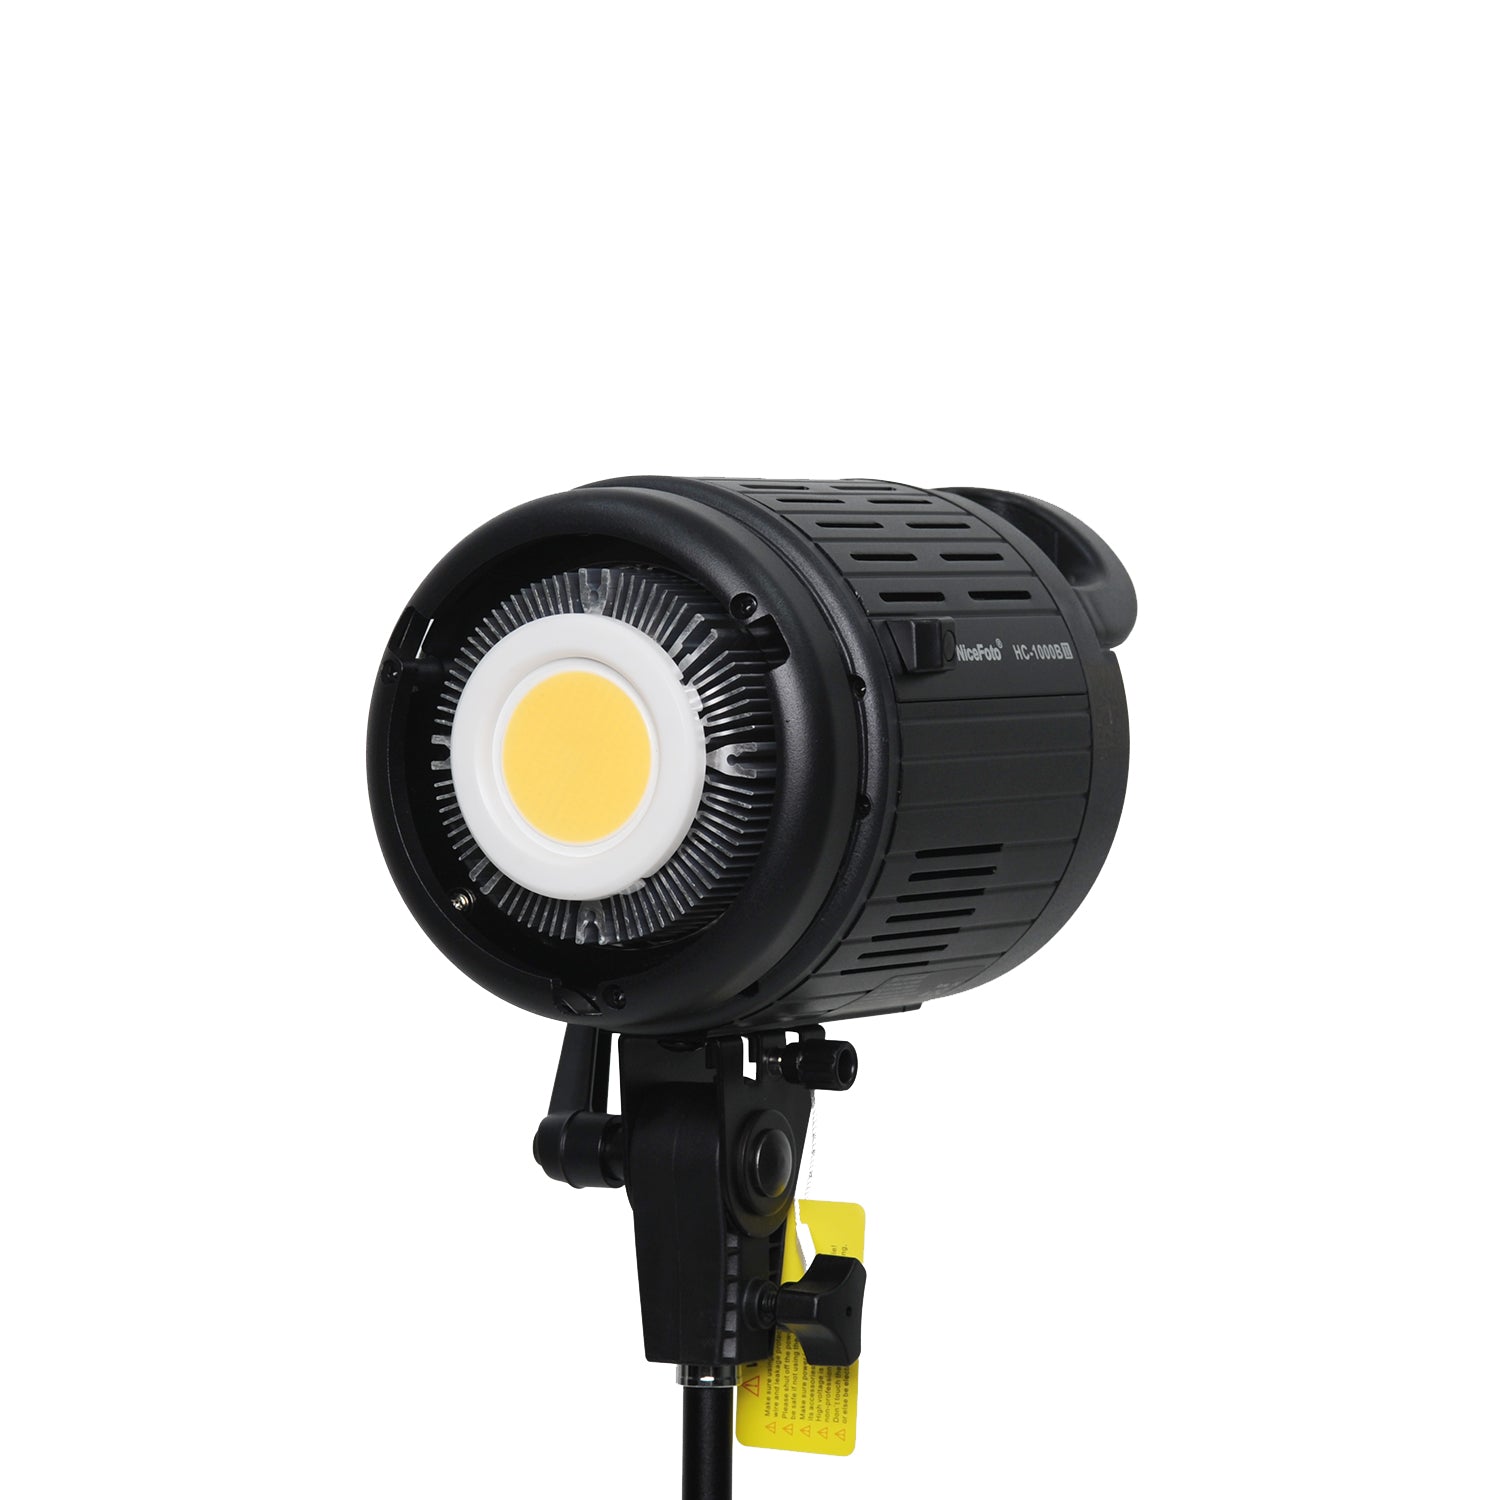 Nicefoto HC-1000B II LED Video Light